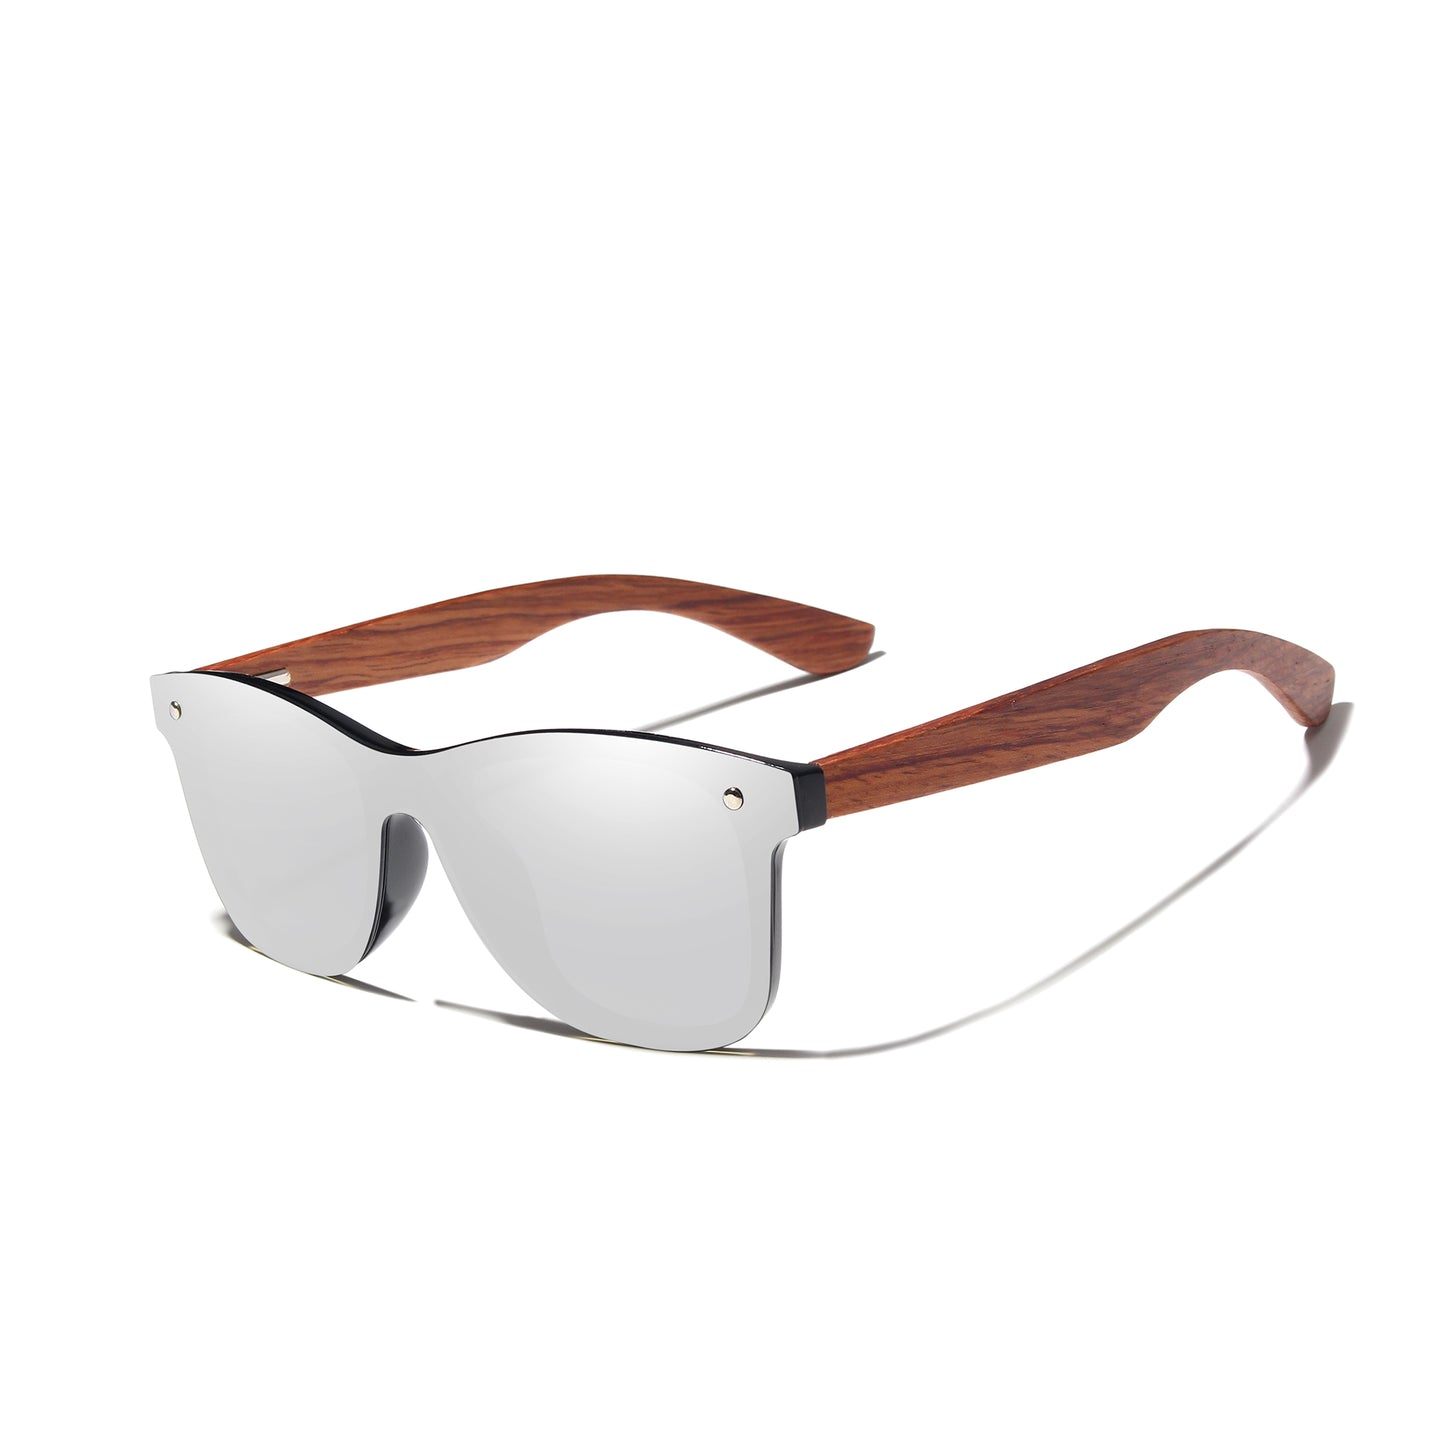 KINGSEVEN Sunglasses Wooden Series B5504